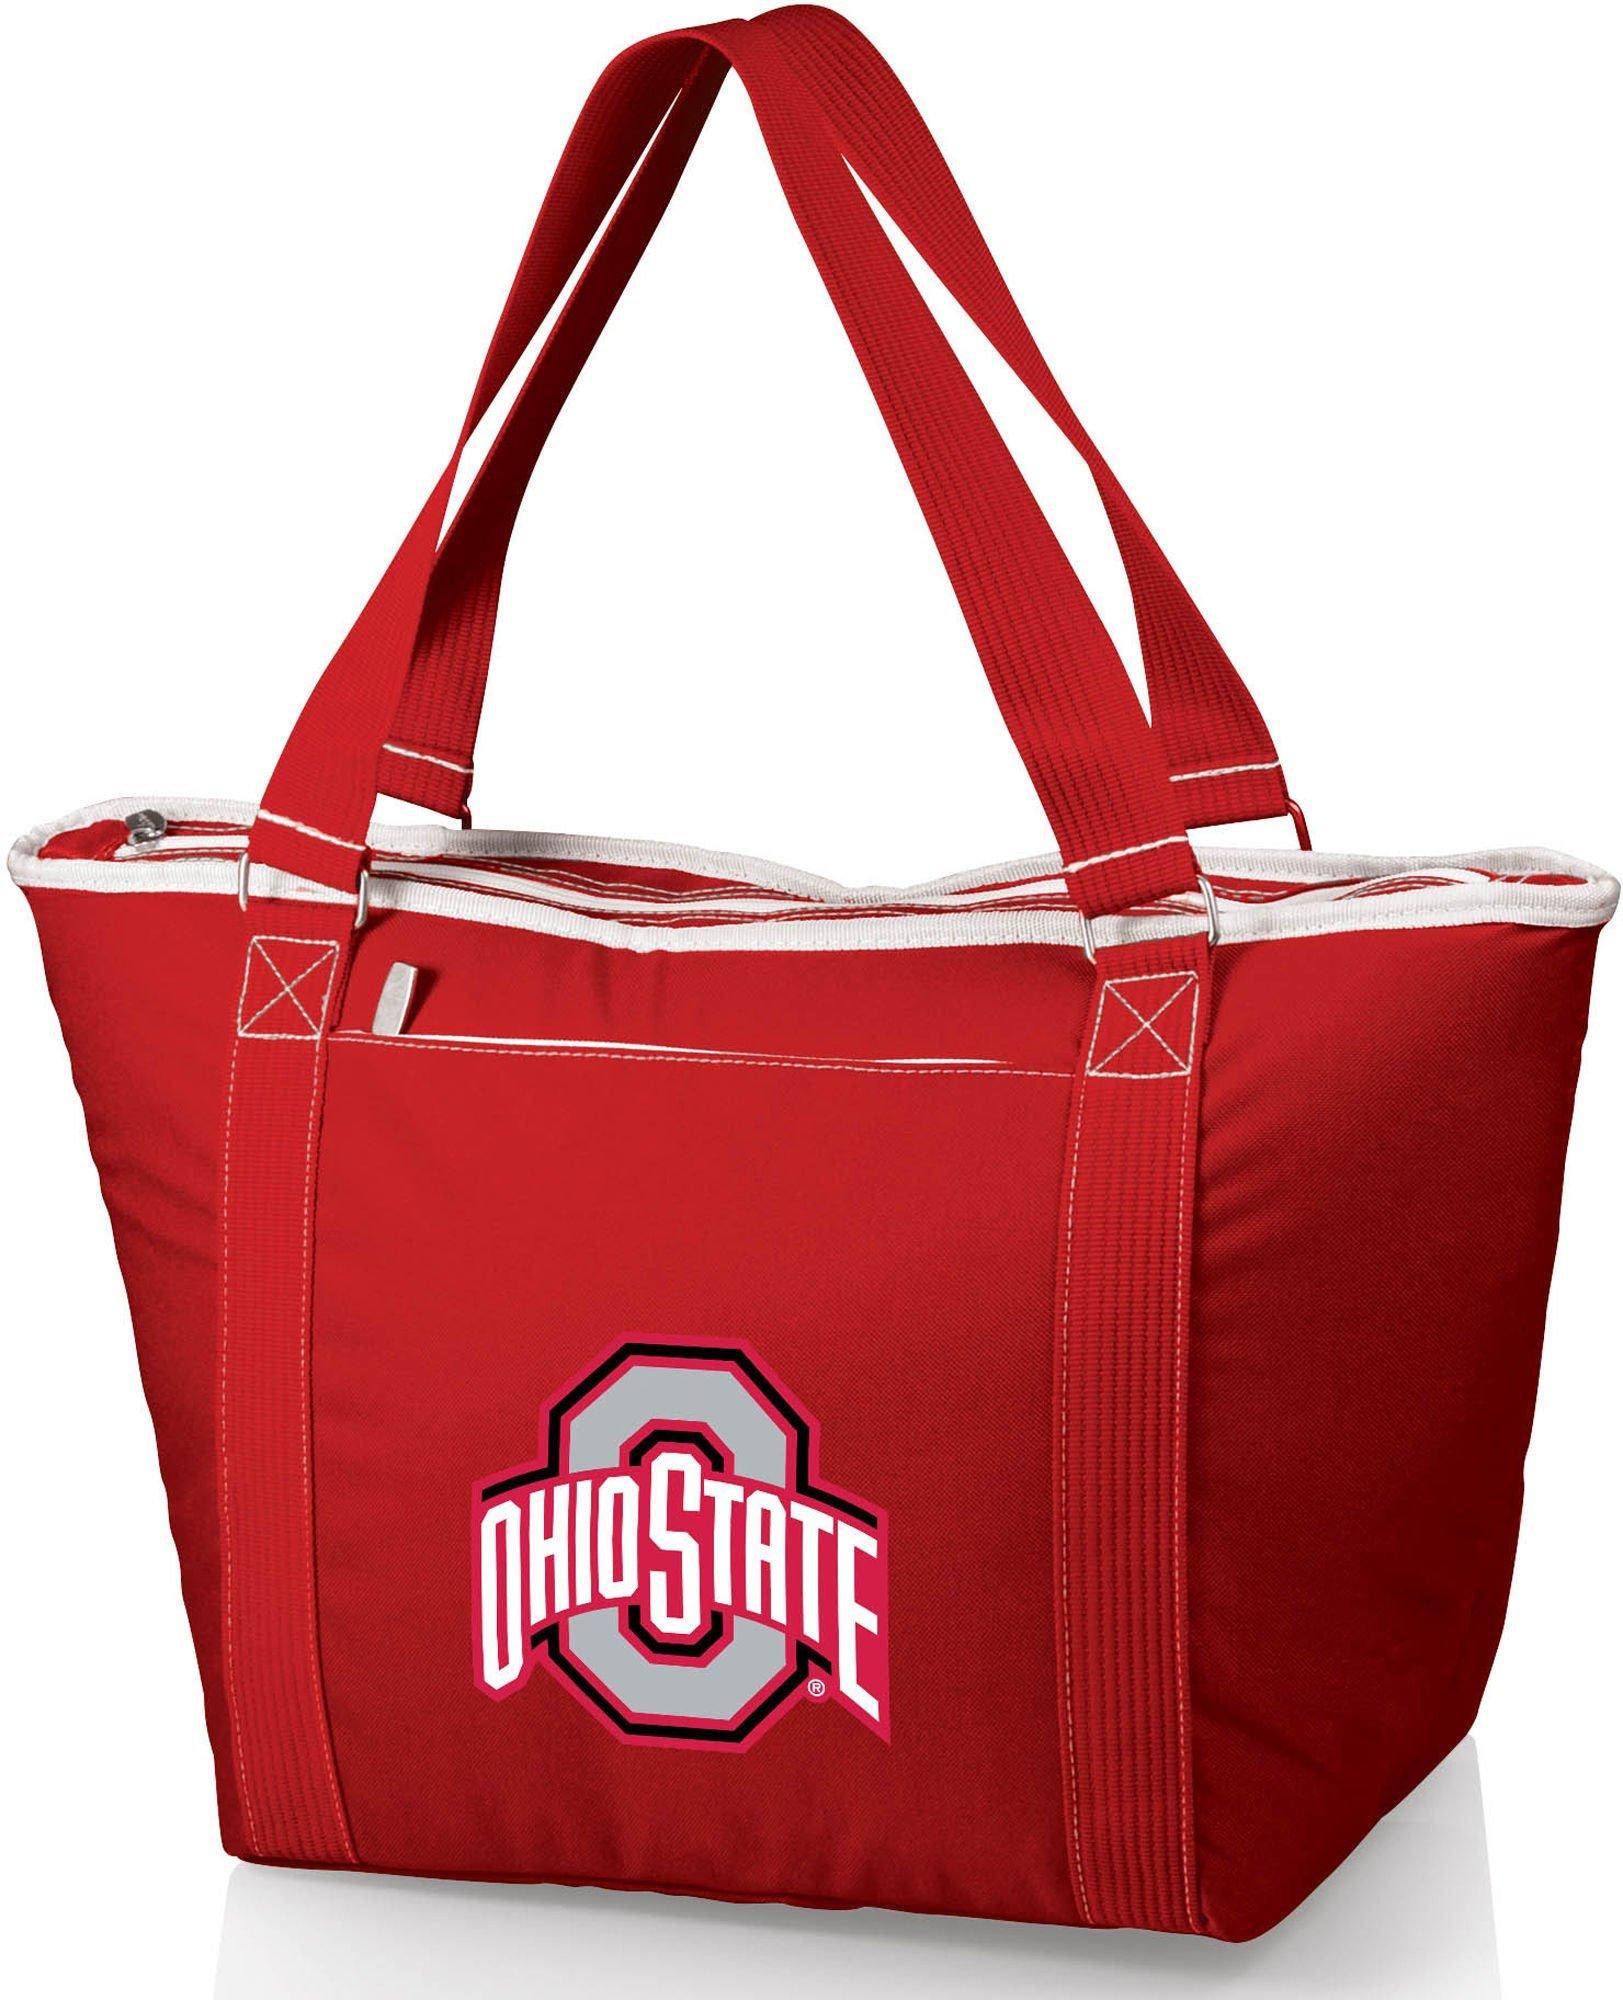 Ohio State Topanga Cooler Tote Bag by Picnic Time